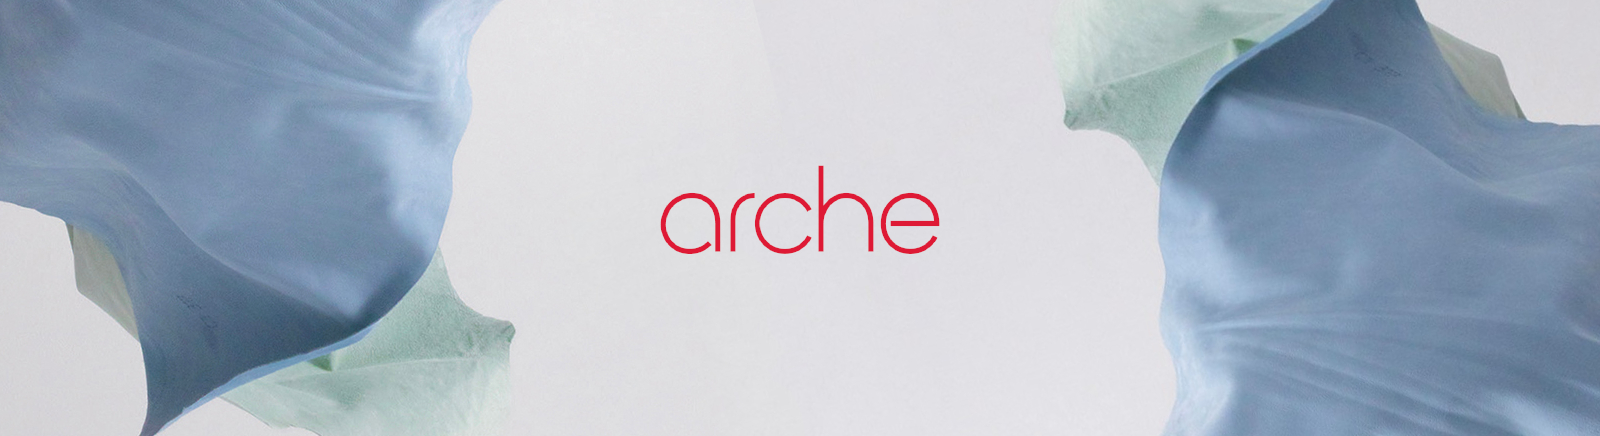 Juppen: Arche Pumps Schuhe online kaufen online shoppen